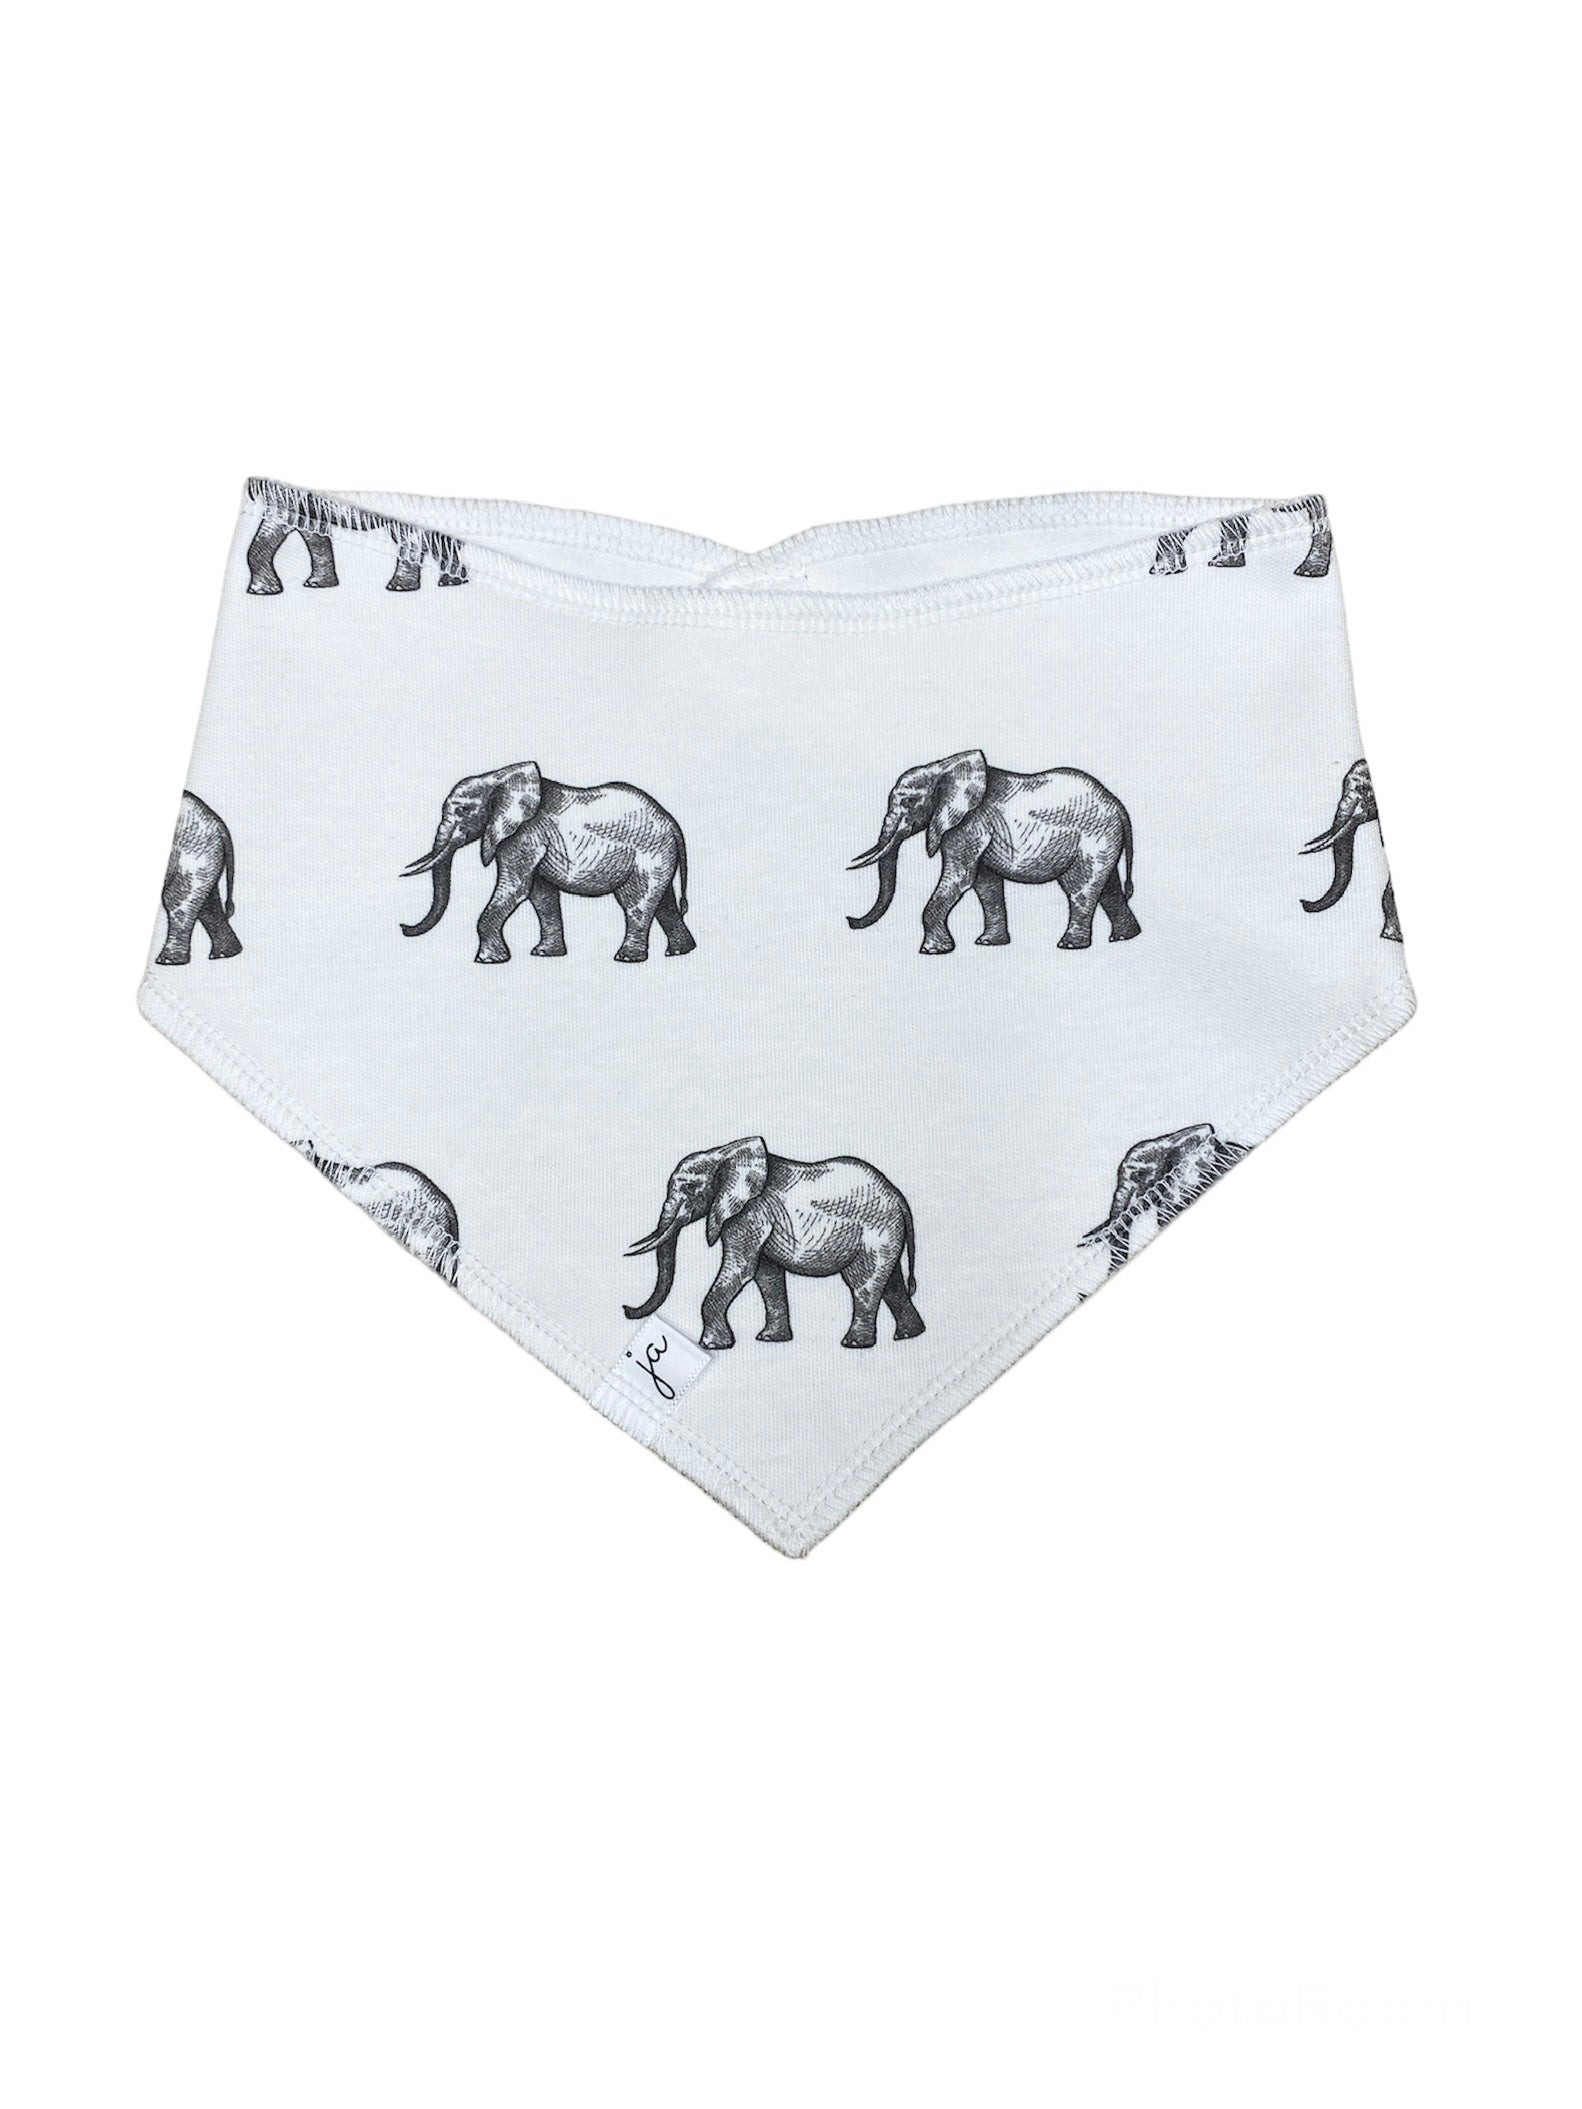 Elephant Print Baby Bib